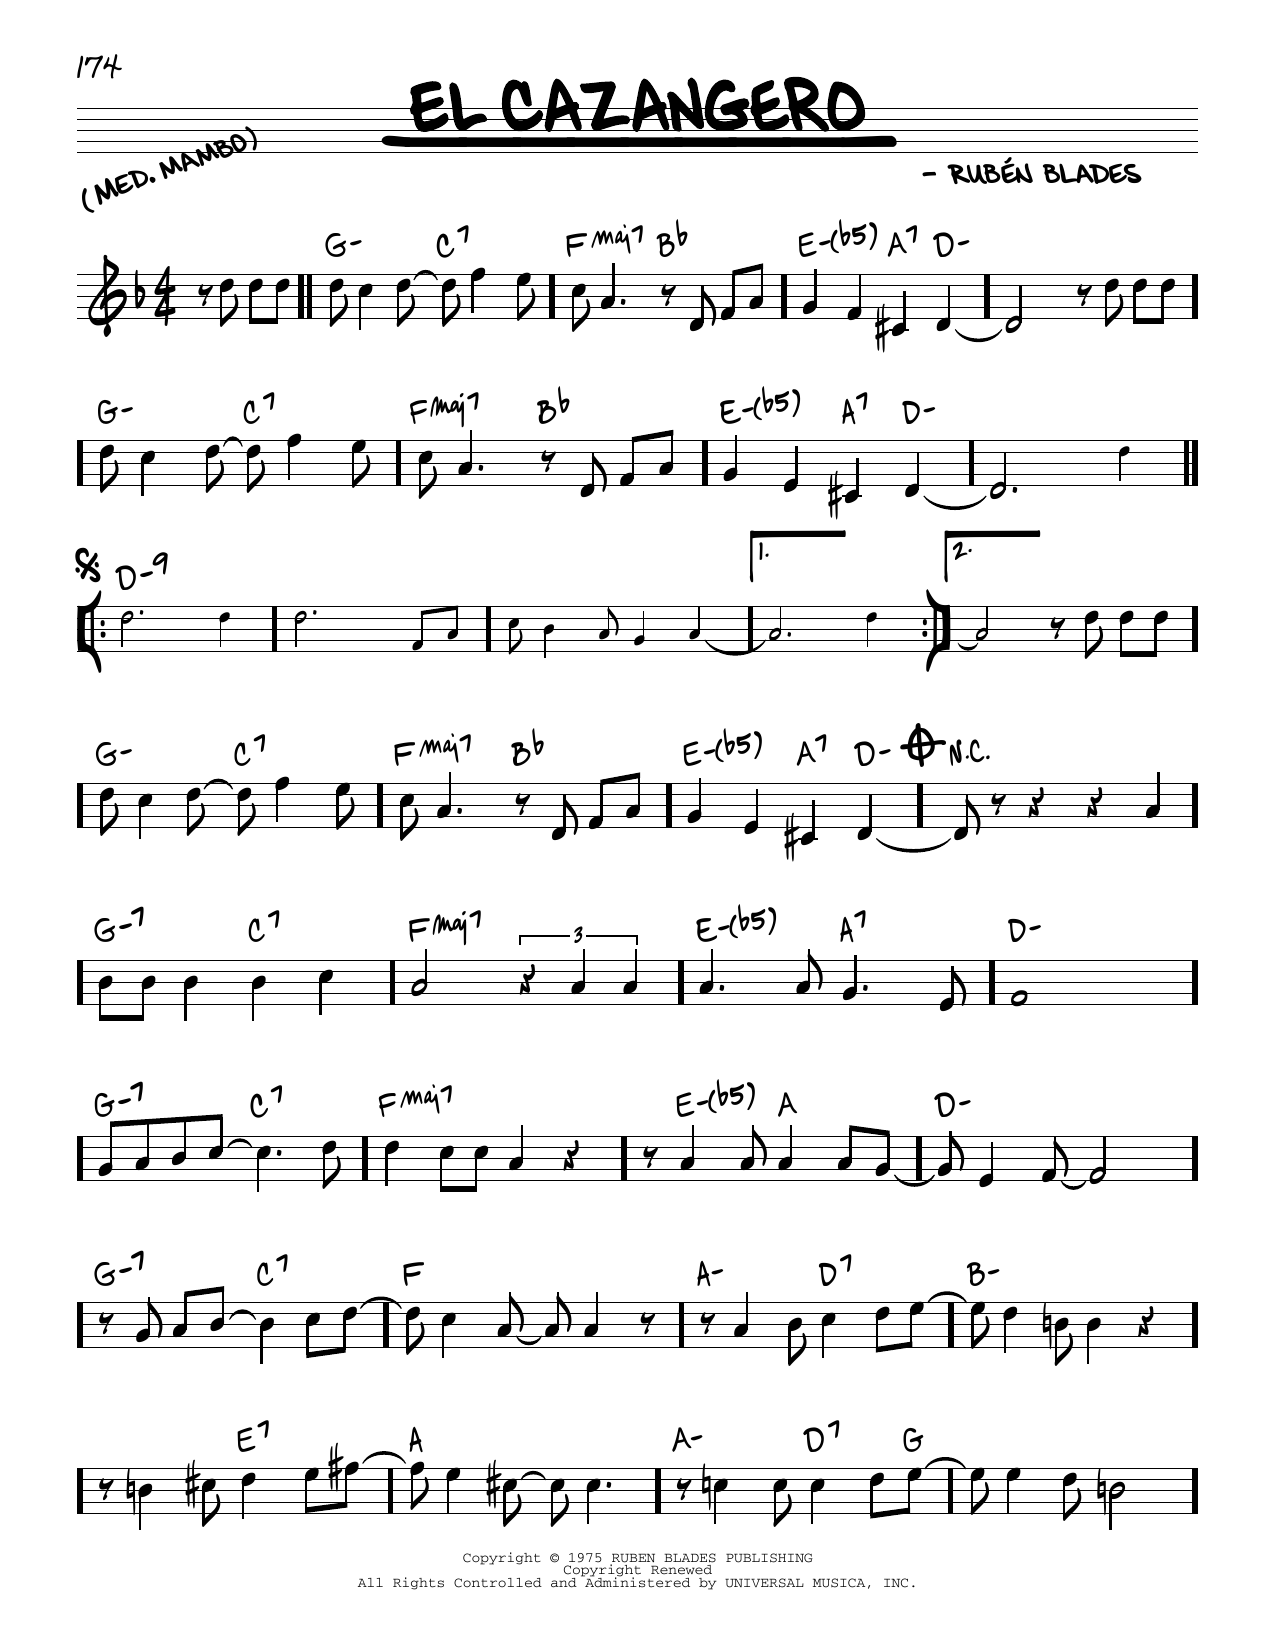 Ruben Blades El Cazangero Sheet Music Notes & Chords for Real Book – Melody & Chords - Download or Print PDF